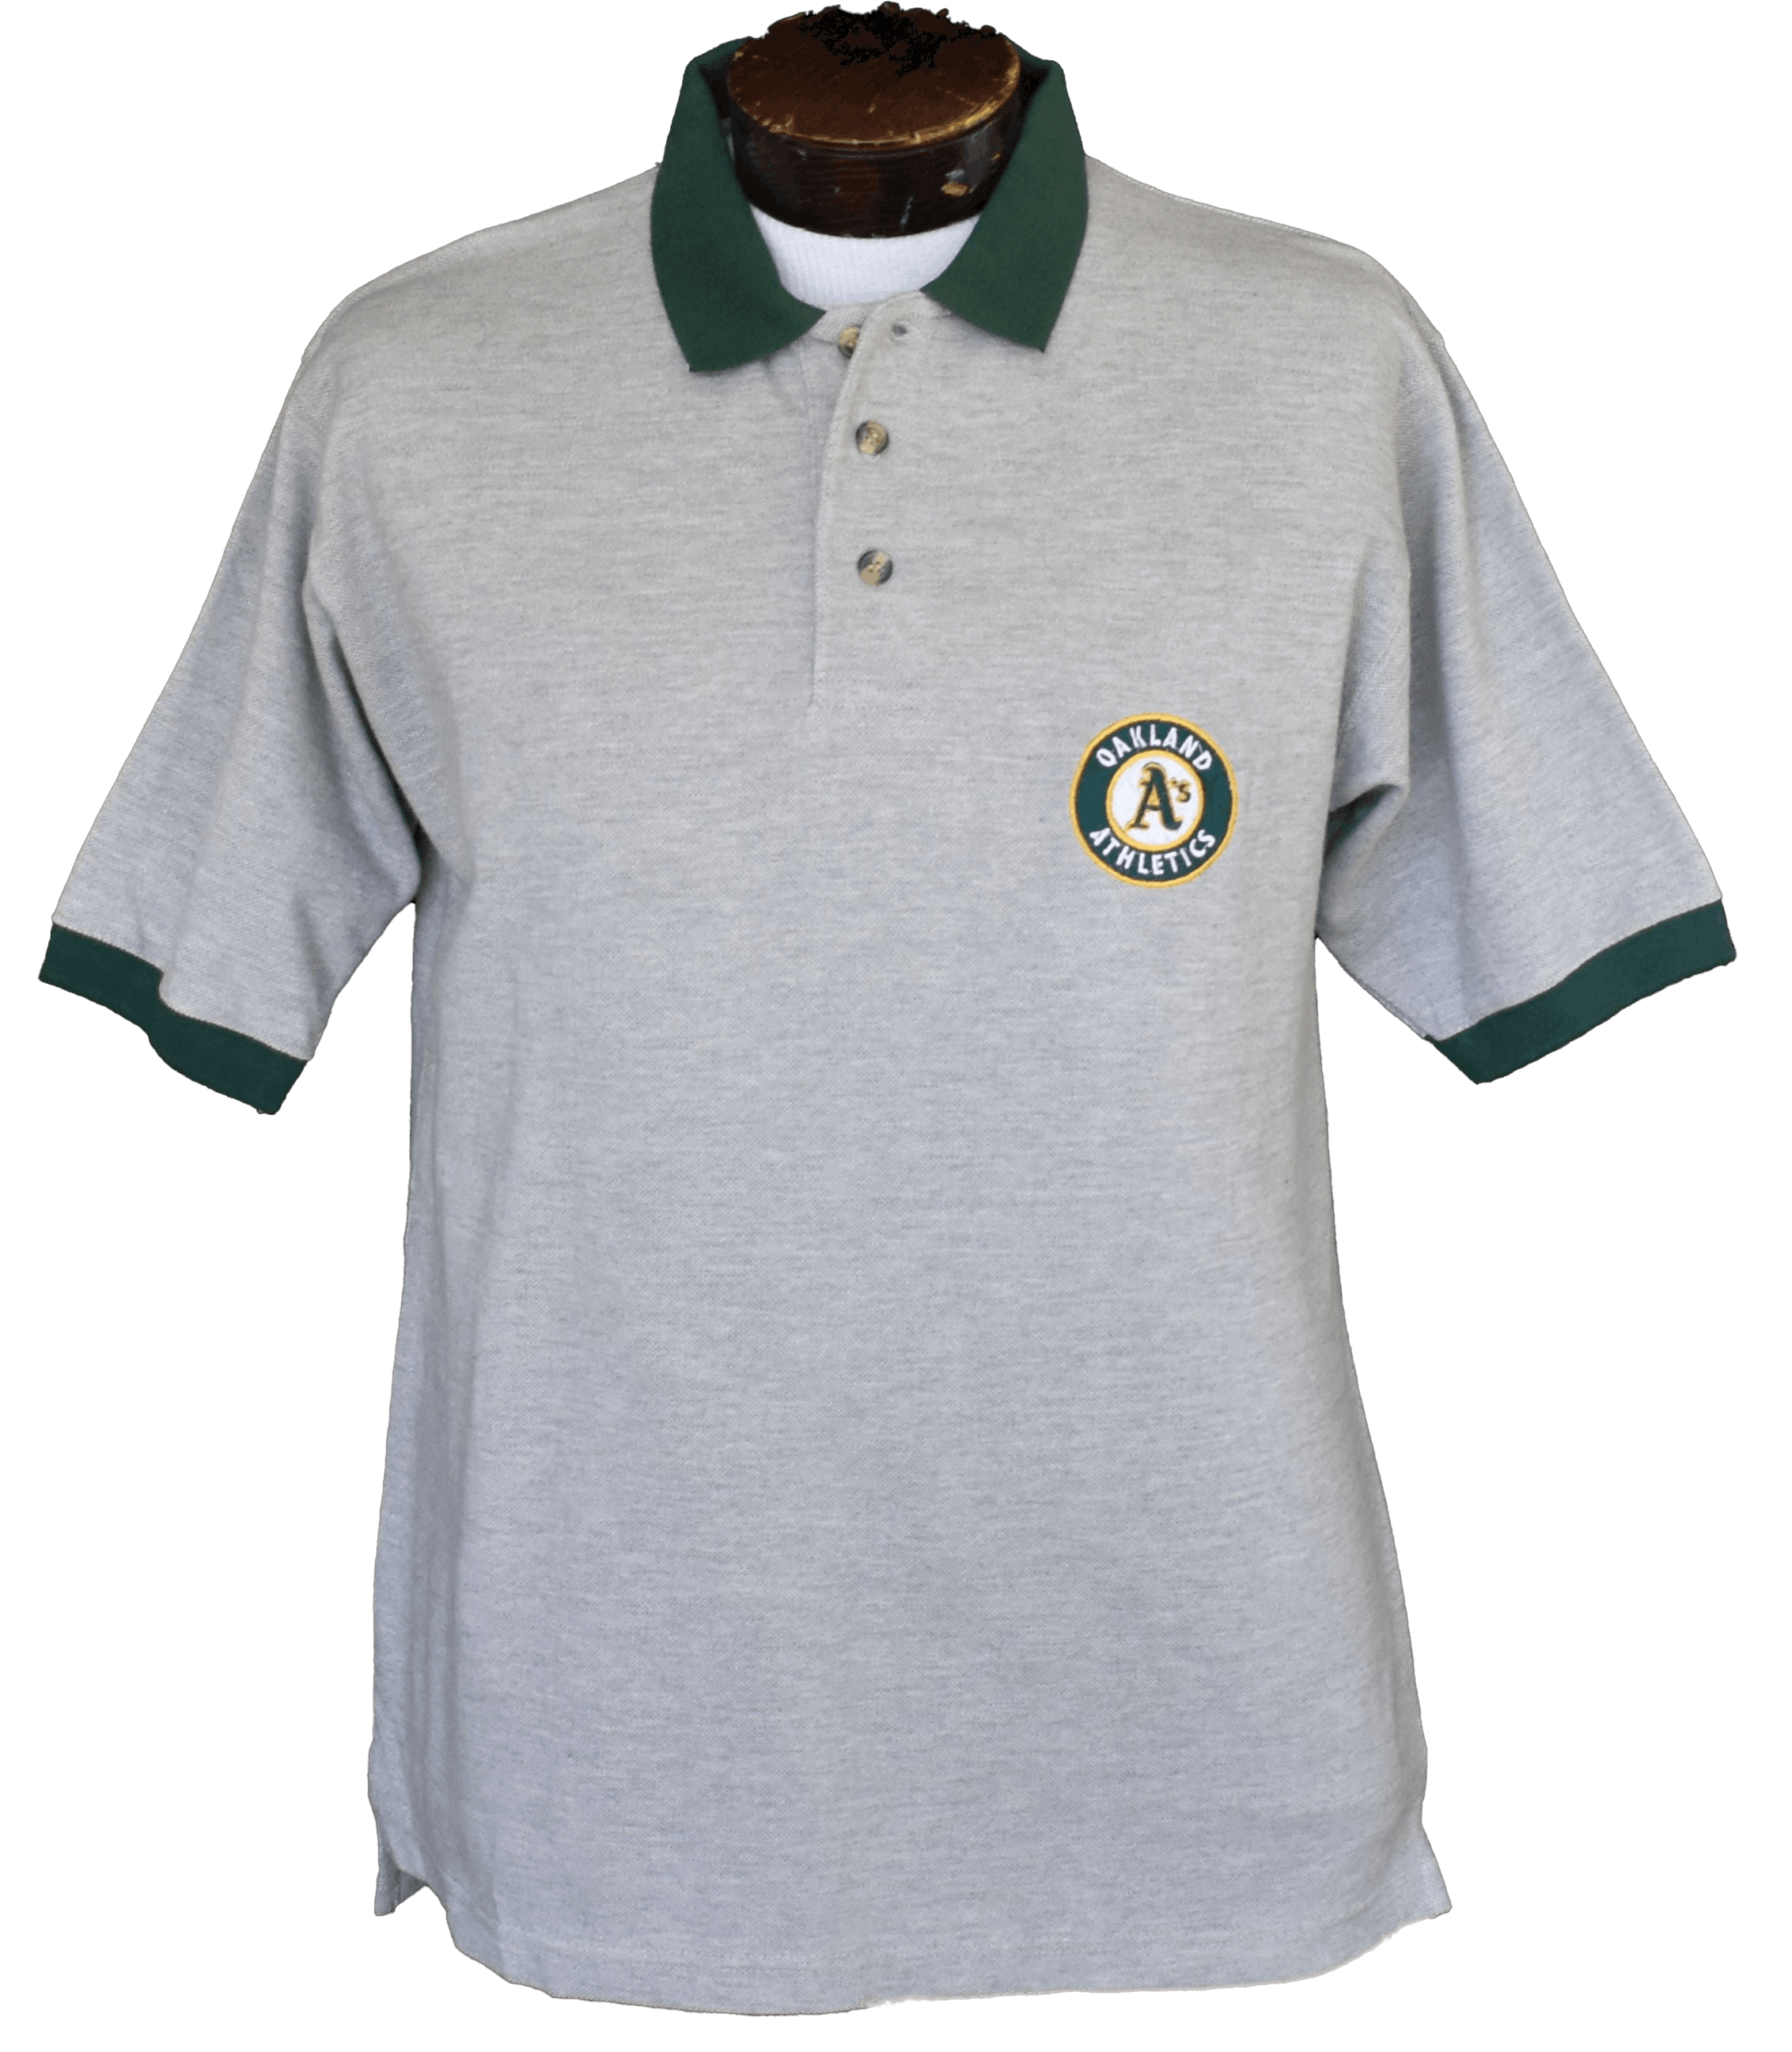 Oakland Athletics Polo, A's Polos, Golf Shirts